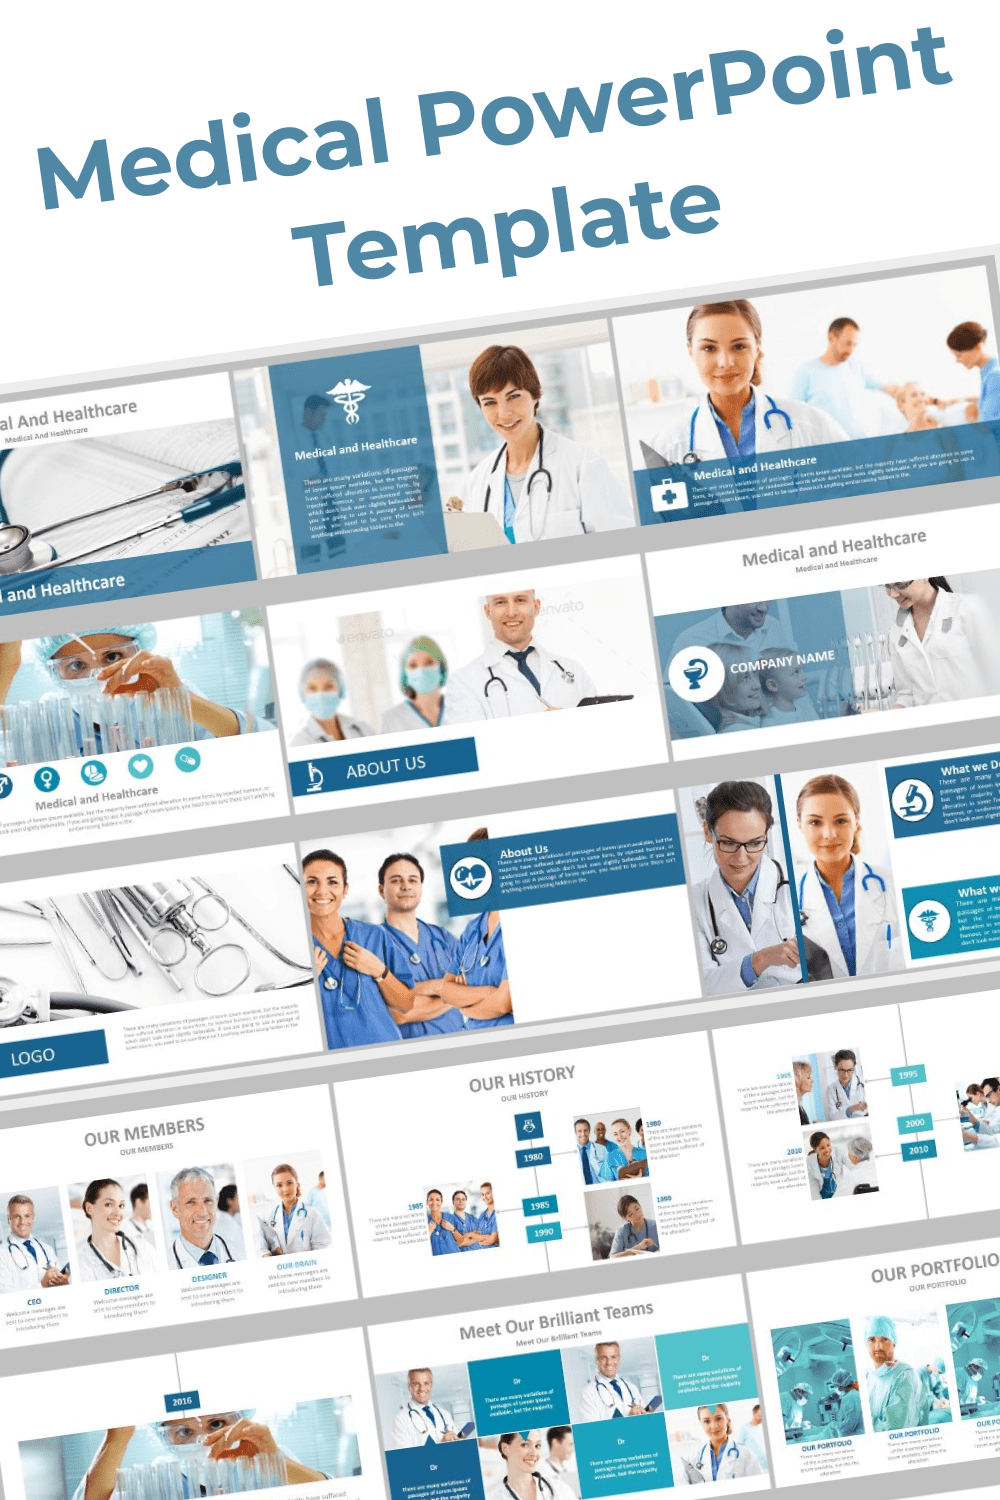 Medical PowerPoint Template Pinterest.